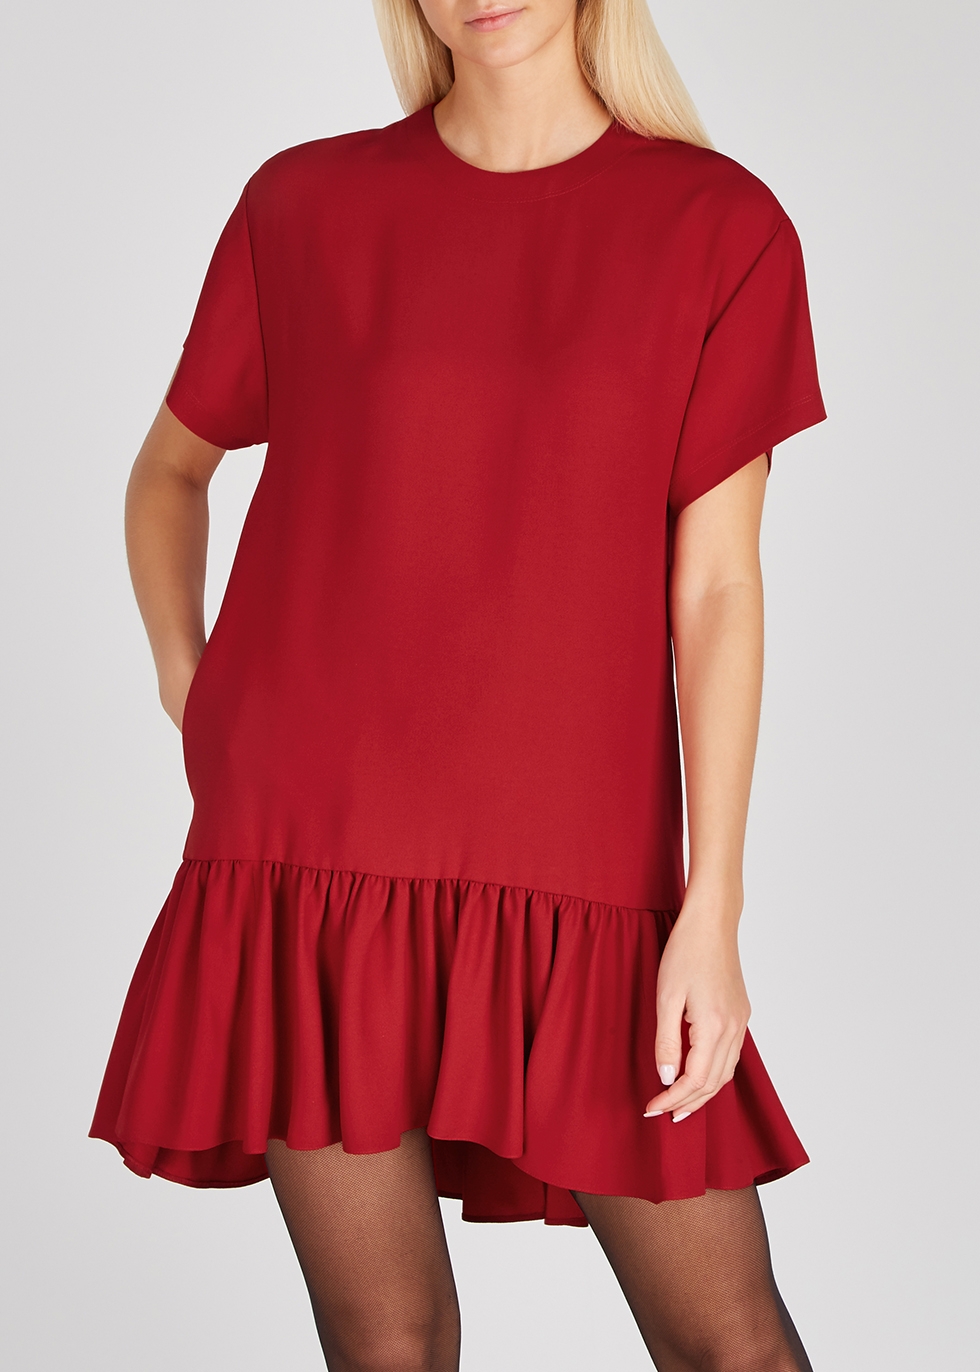 red mini dress casual